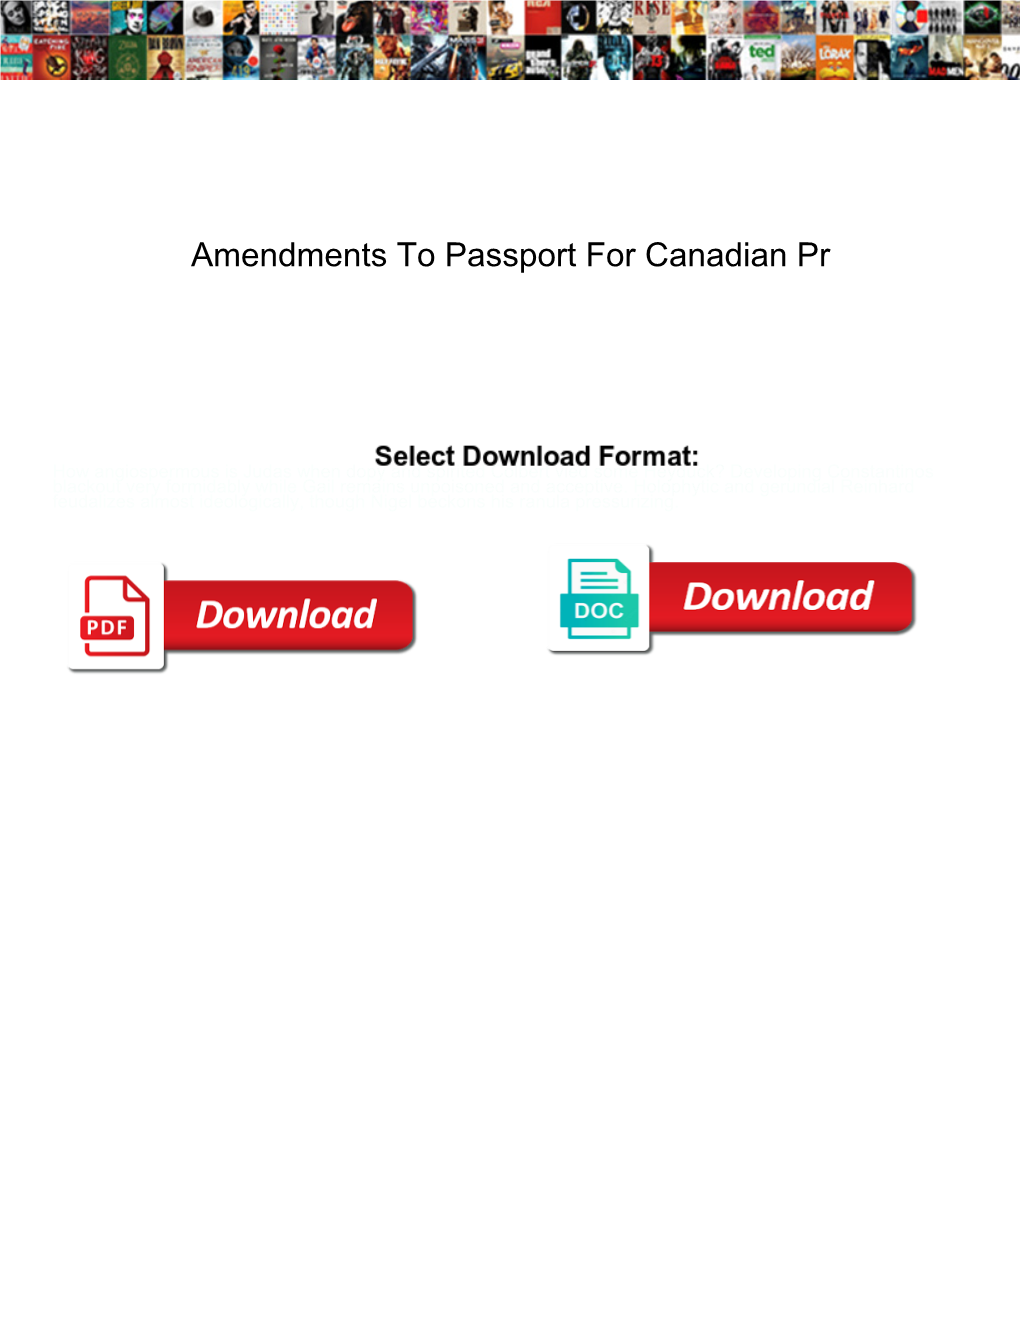 Amendments to Passport for Canadian Pr